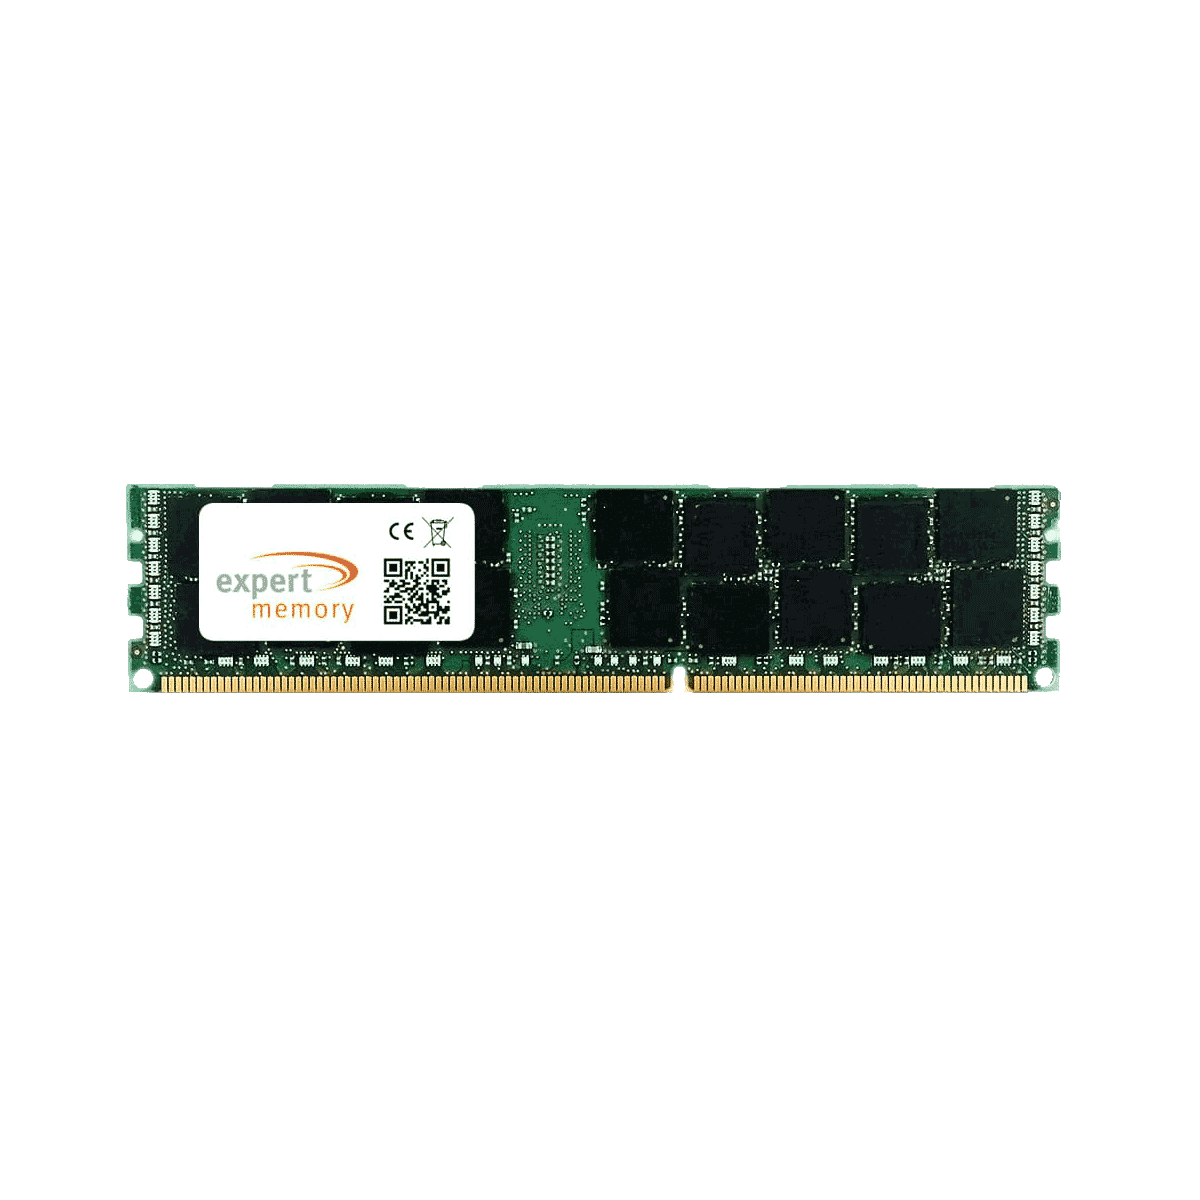 8 IBM MEMORY 8GB Memory DDR3 Lenovo X3630 RAM LV GB Server RDIMM EXPERT Upgrade (7158) System System M4 2Rx4 1600